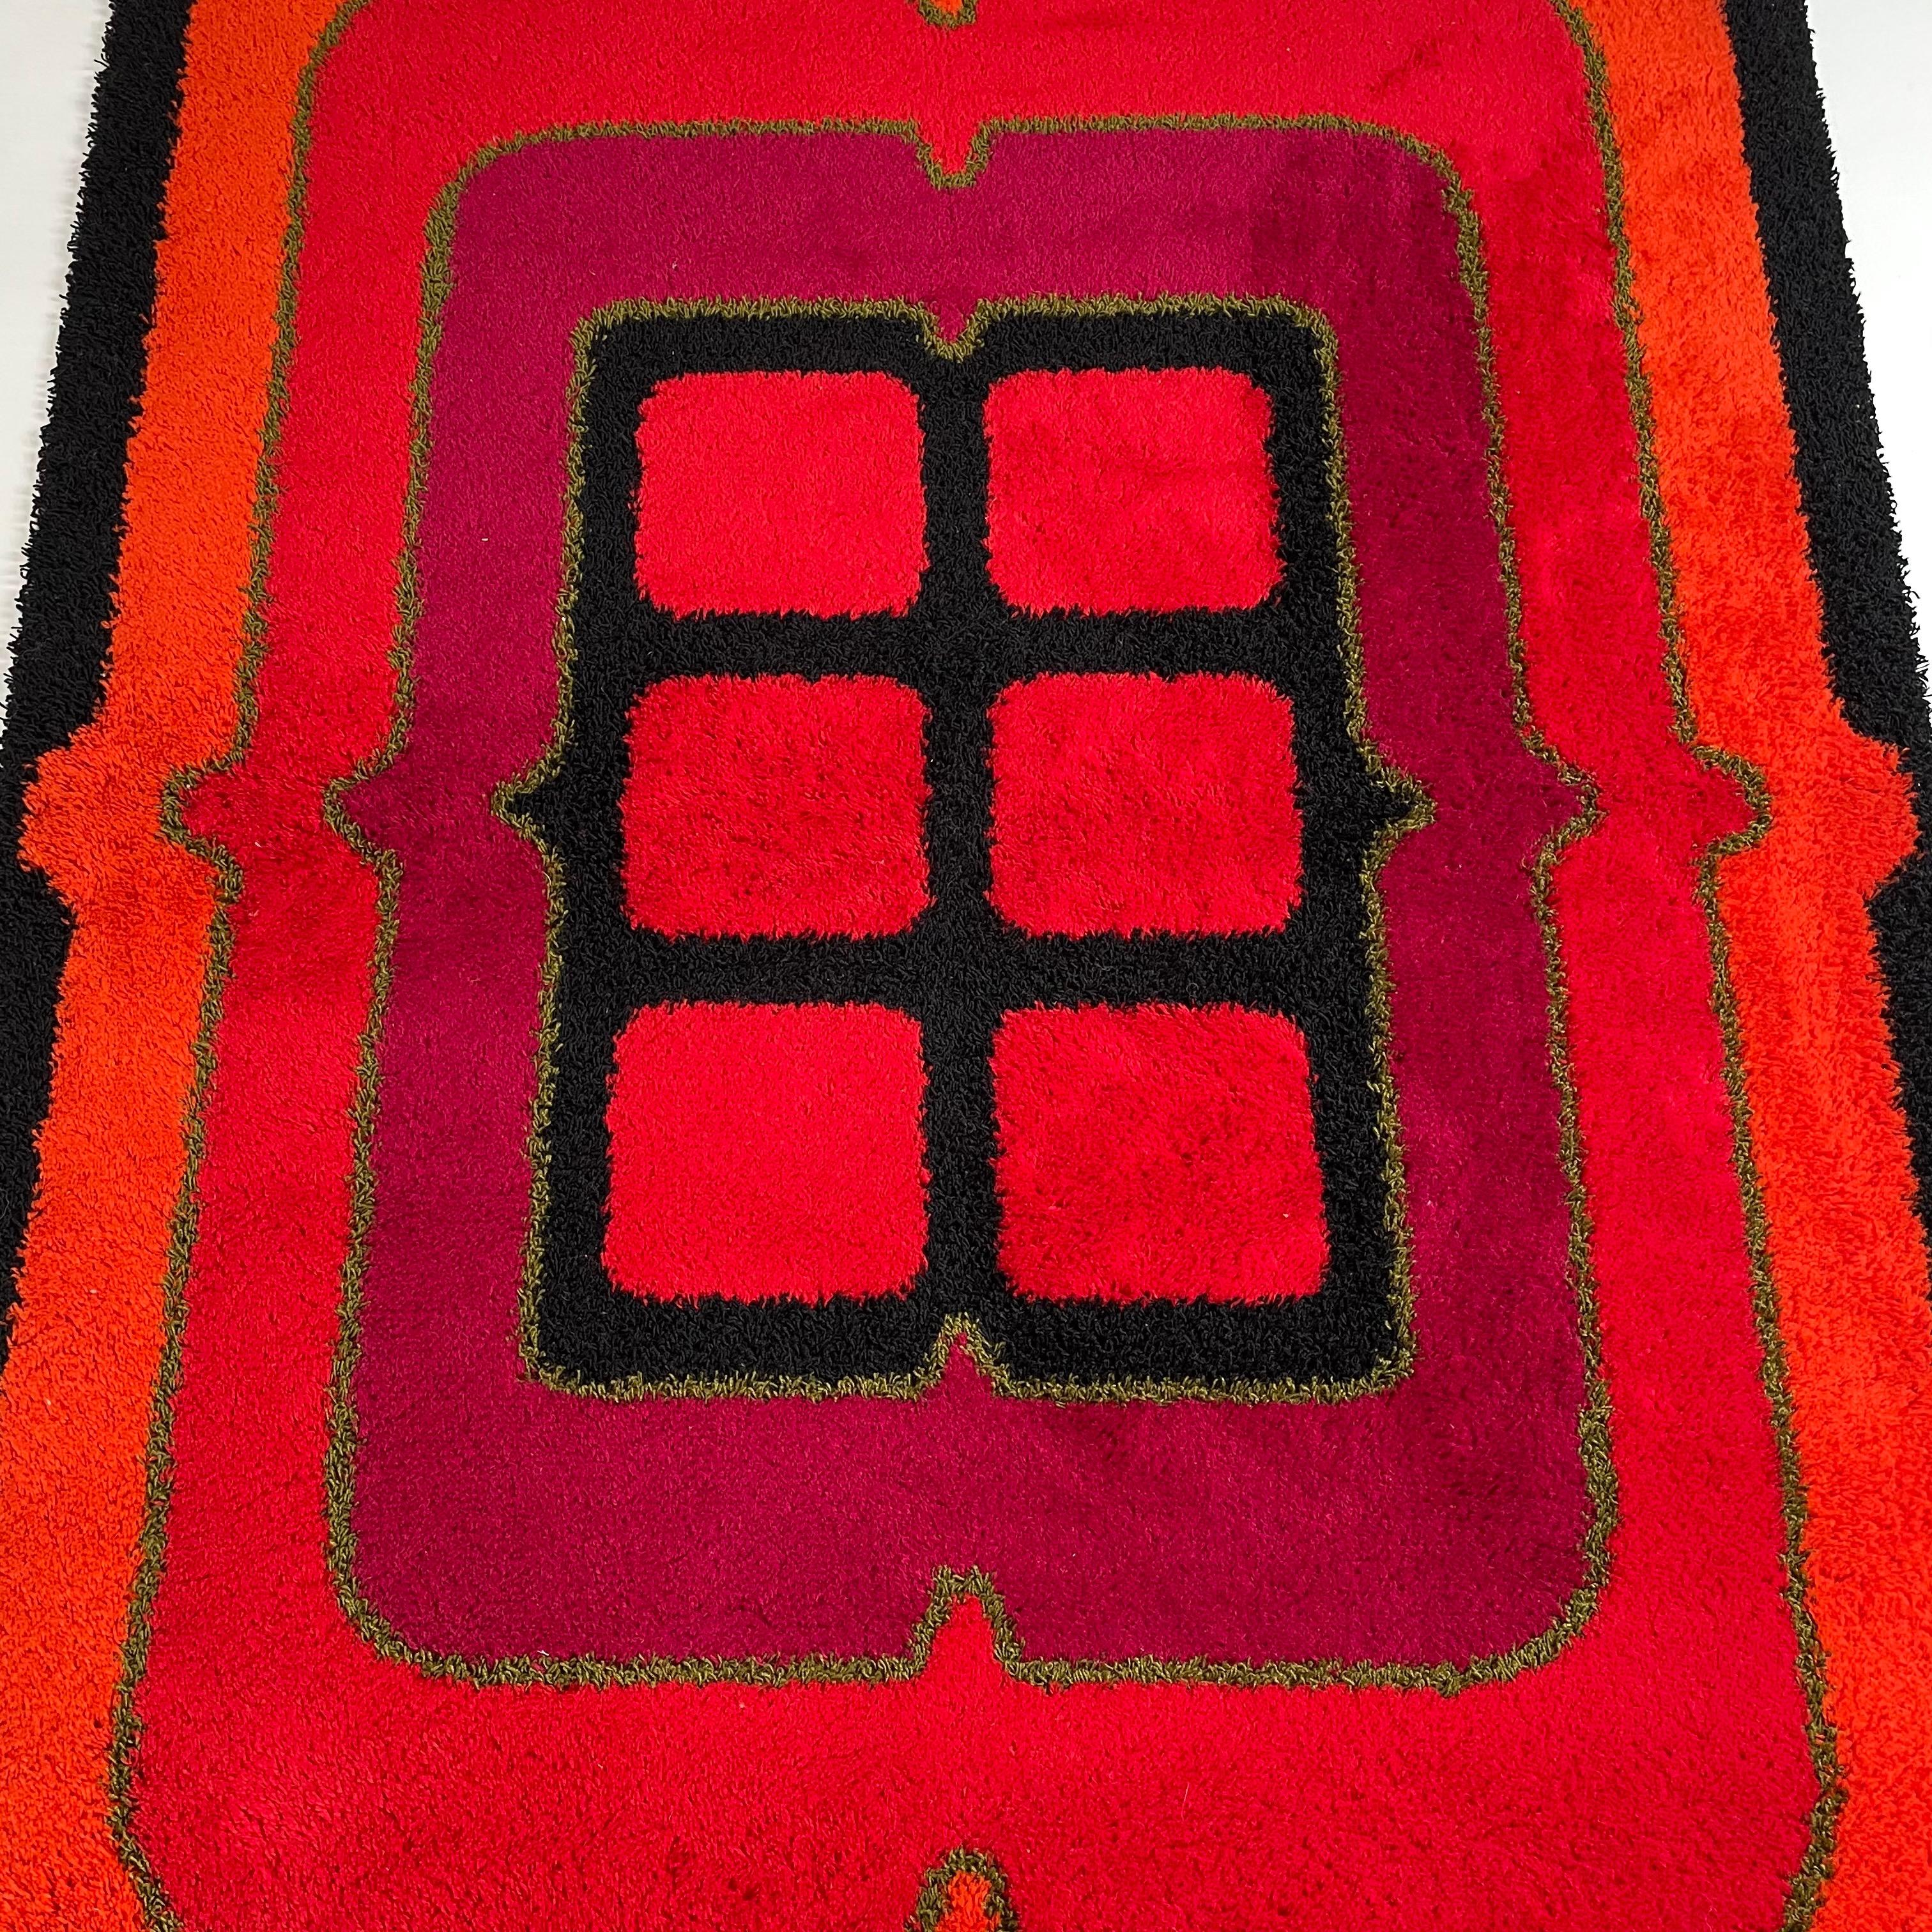 New Old Stock Wool Rya Rug Tapestry 